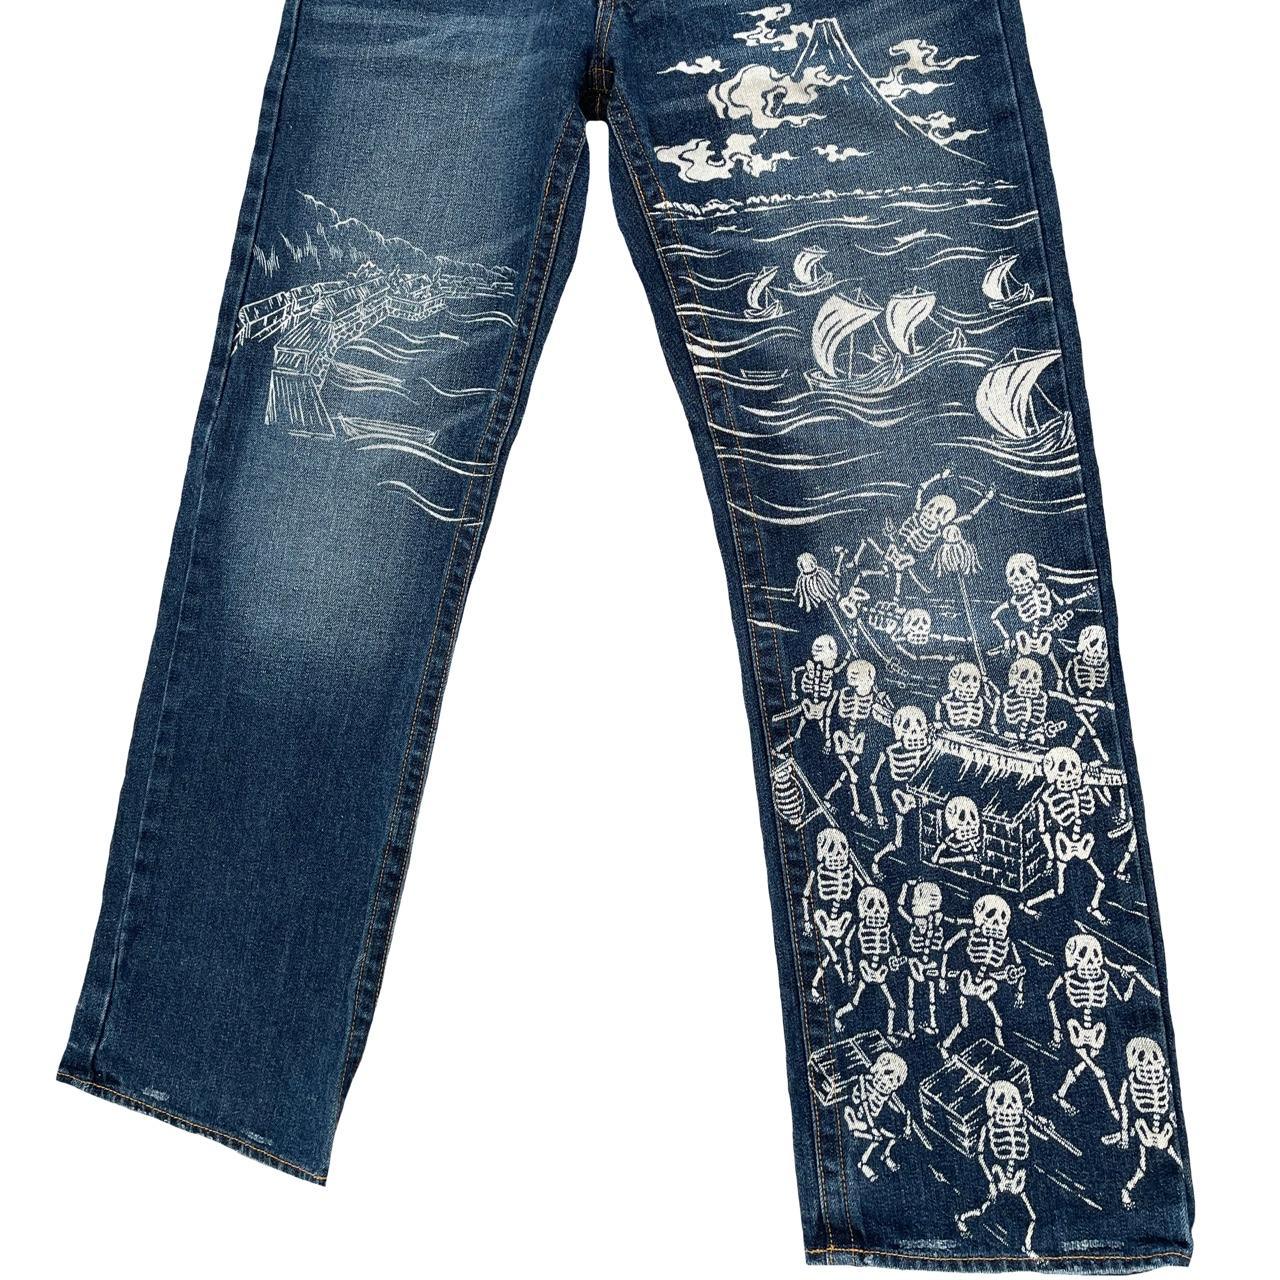 Japanese Skeleton Printed Jeans - Known Source